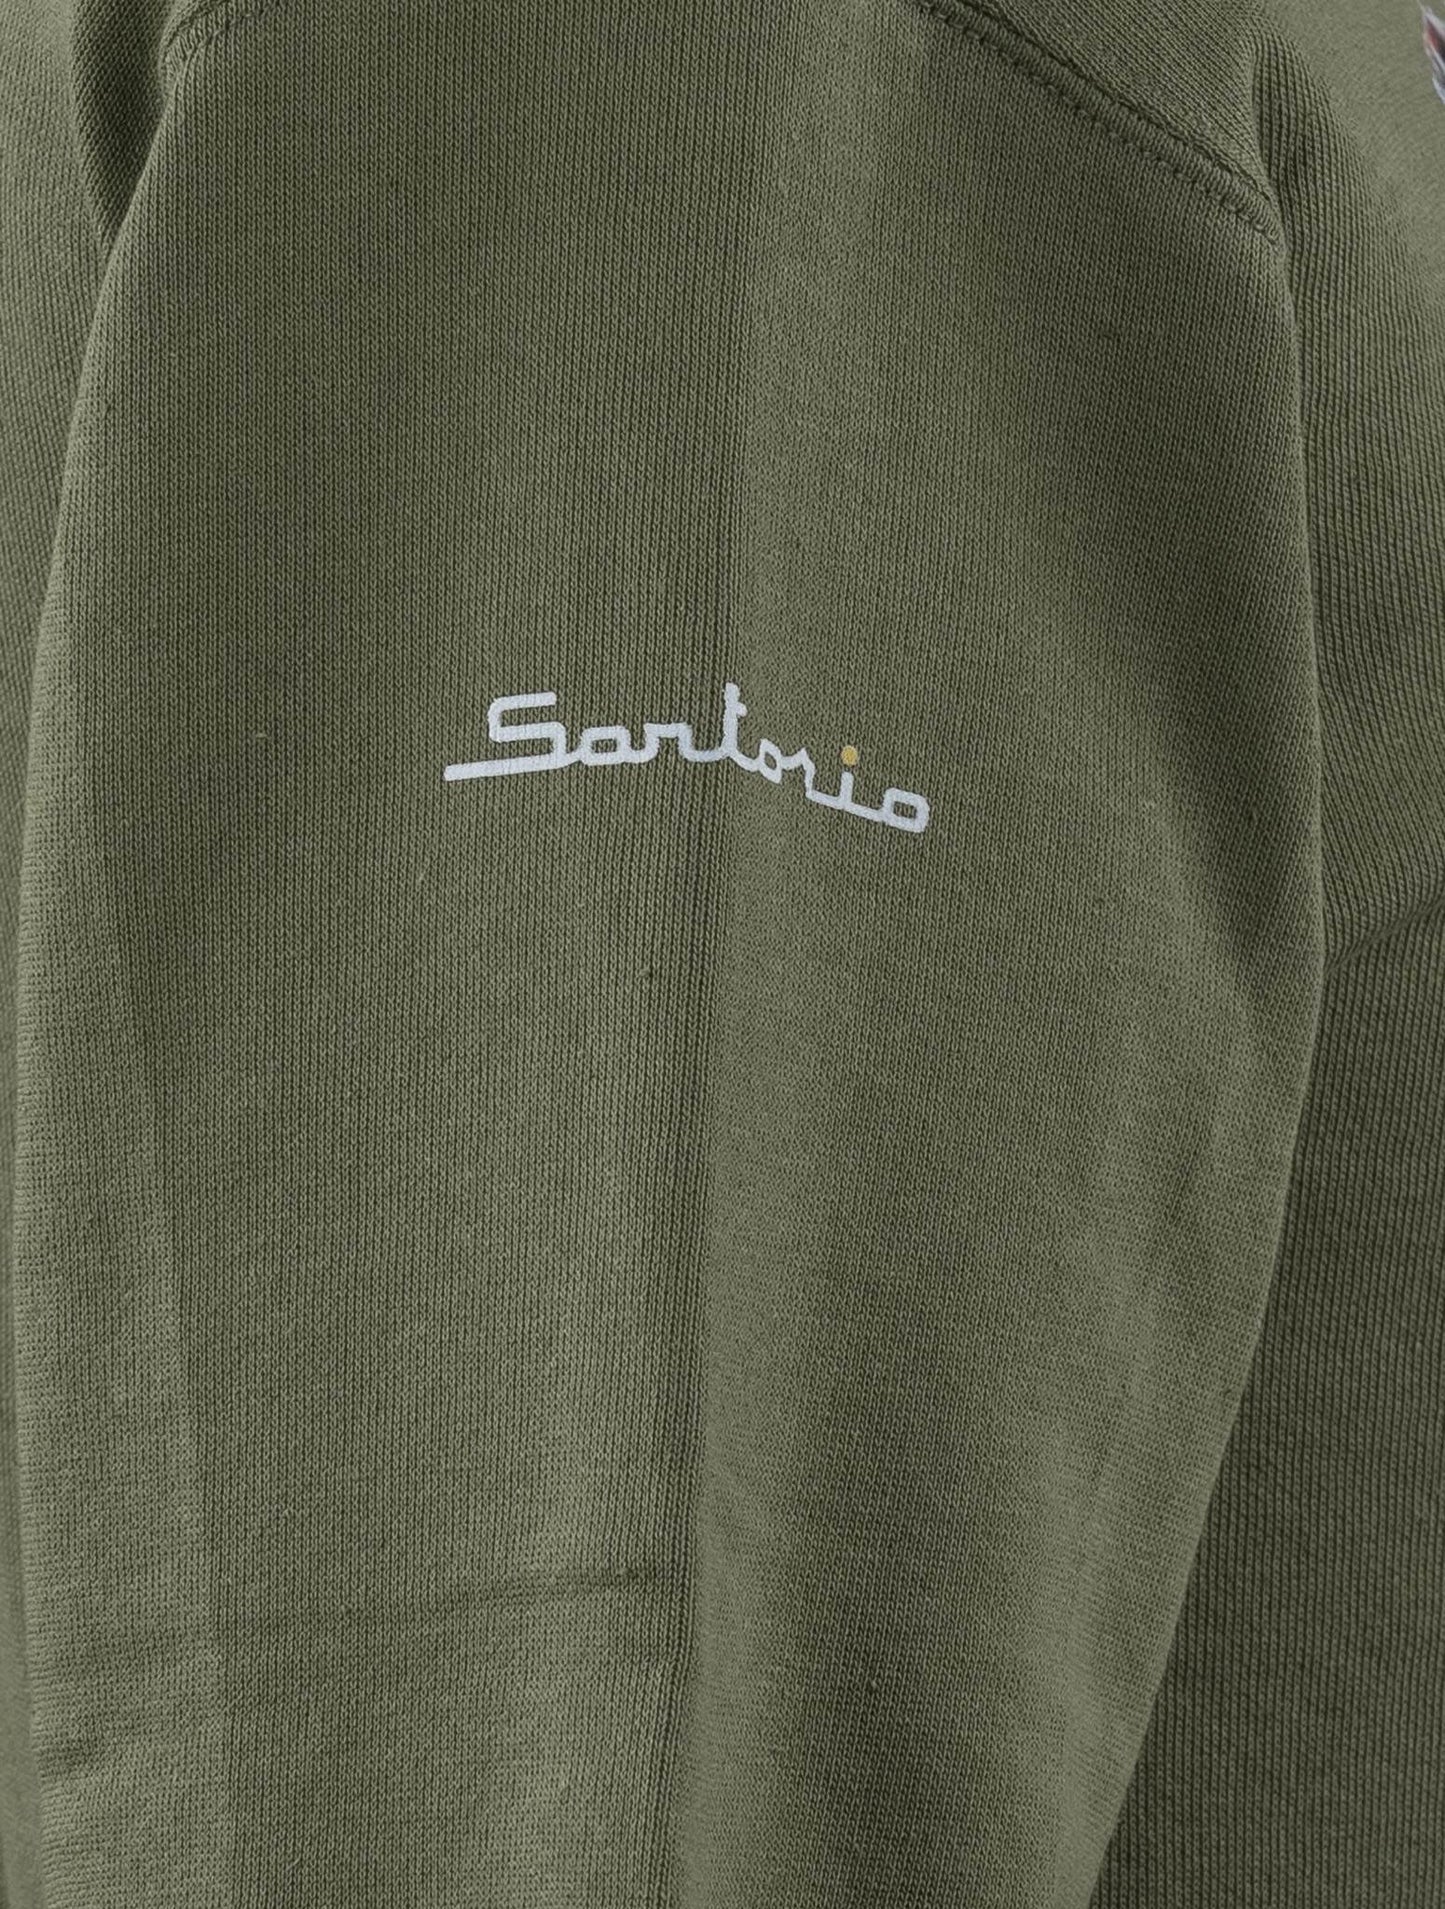 Sartorio Napoli Grøn Cotton Sweater Specialudgaver